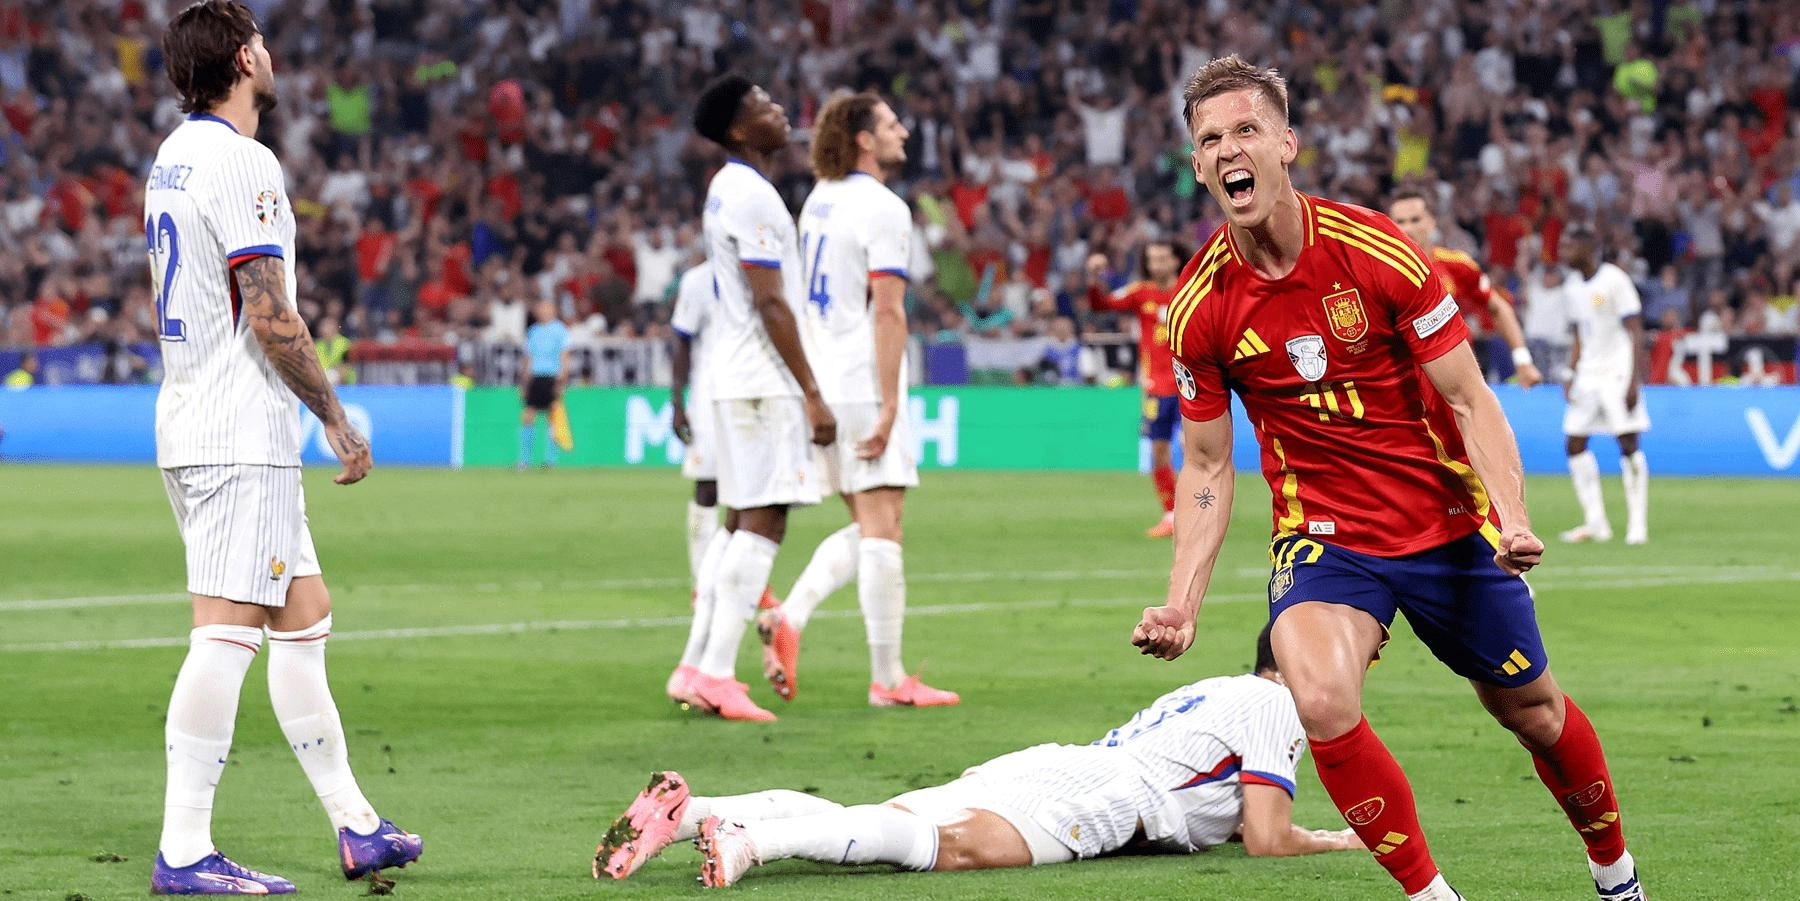 ENGLEZI PRED 2. VEZANOM PRILIKOM: Španjolci žele rekordnu 4. titulu prvaka Europe